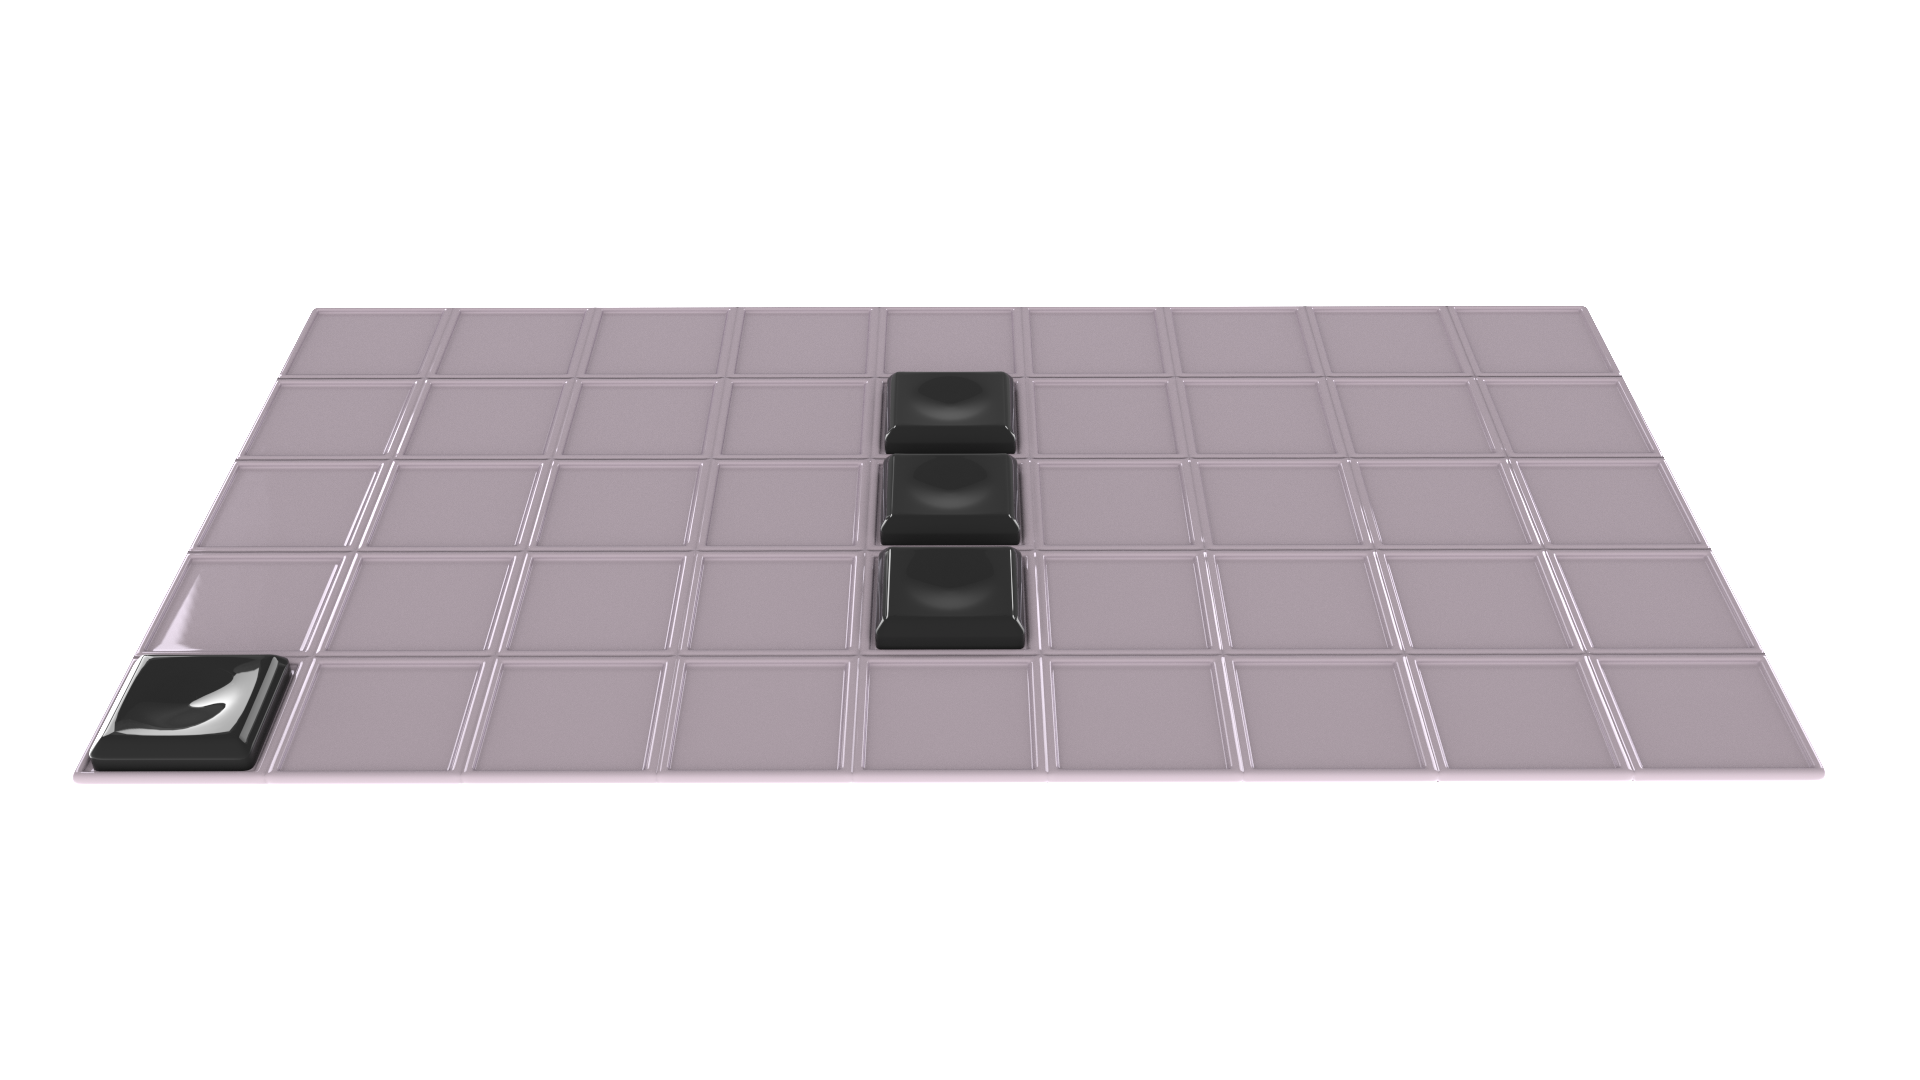 Scrabble Tile visualisation in Blender